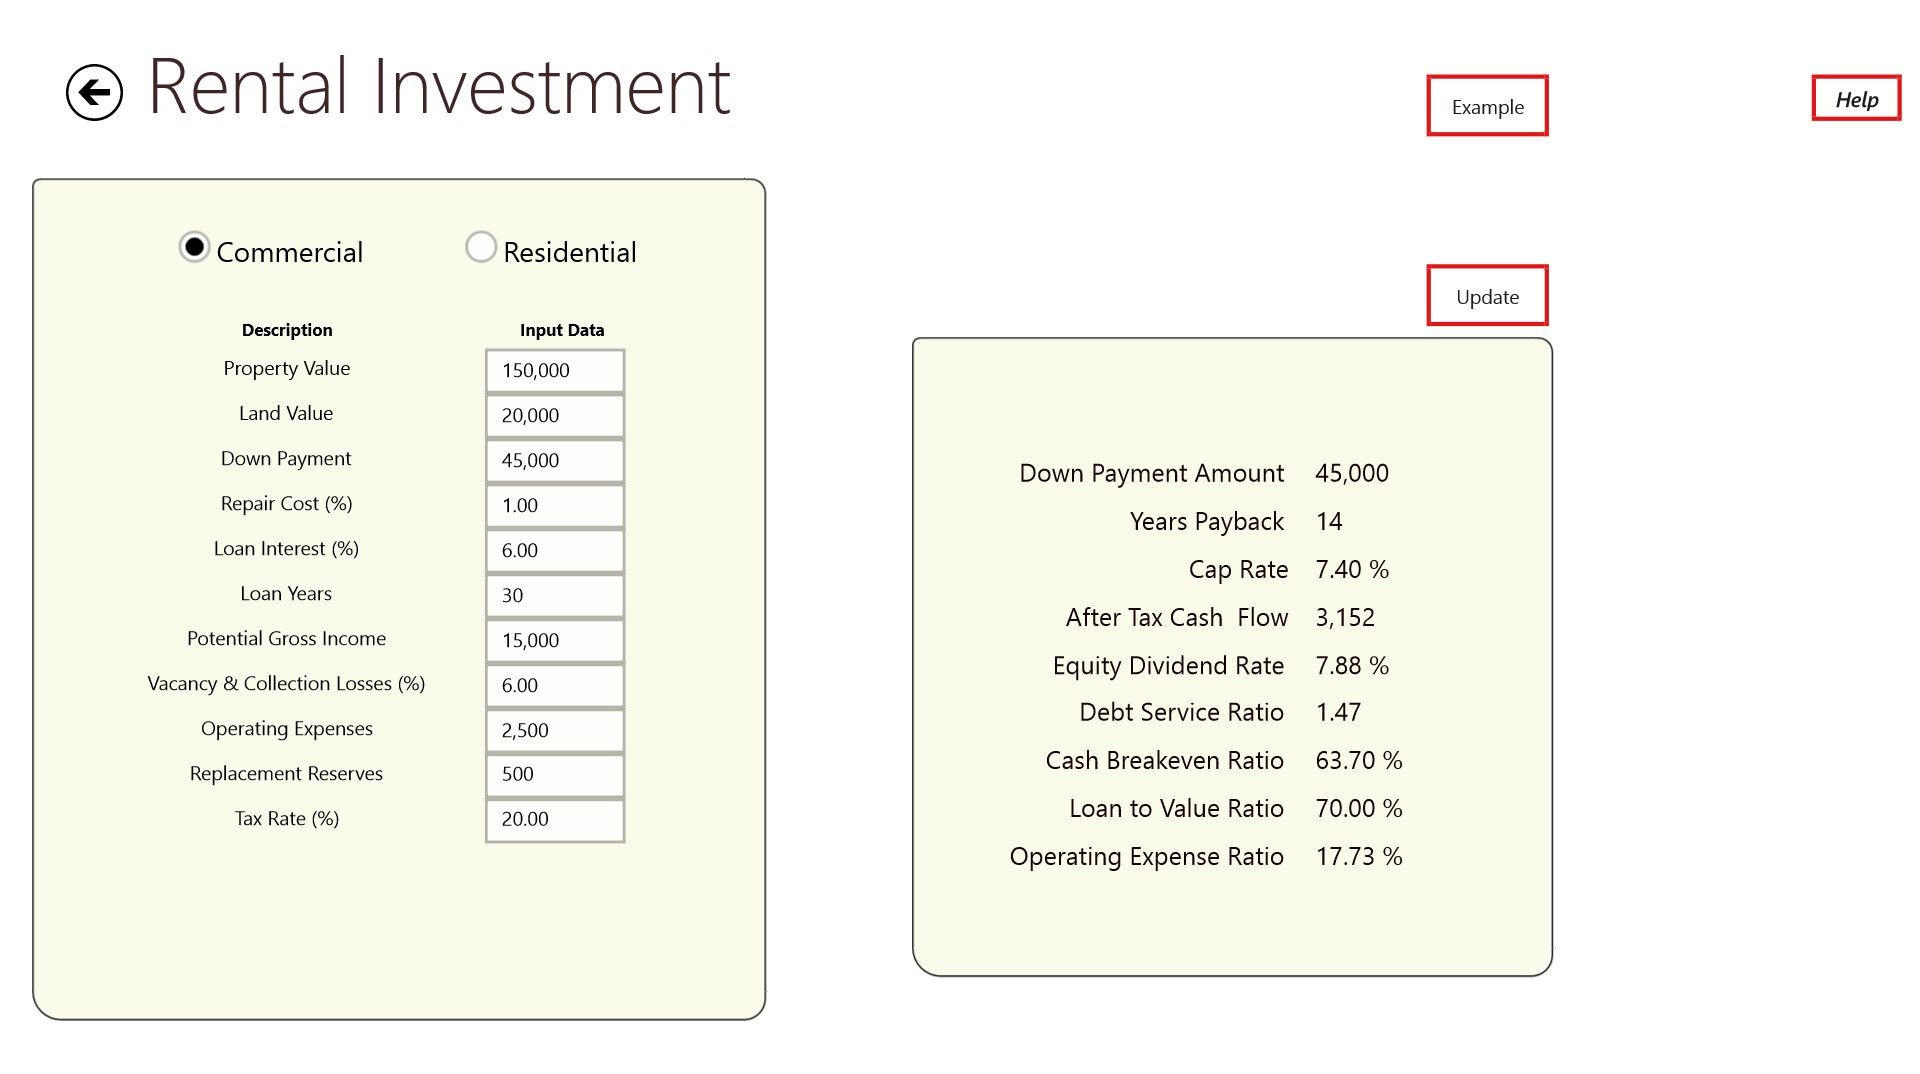 Rental Investment Analysis